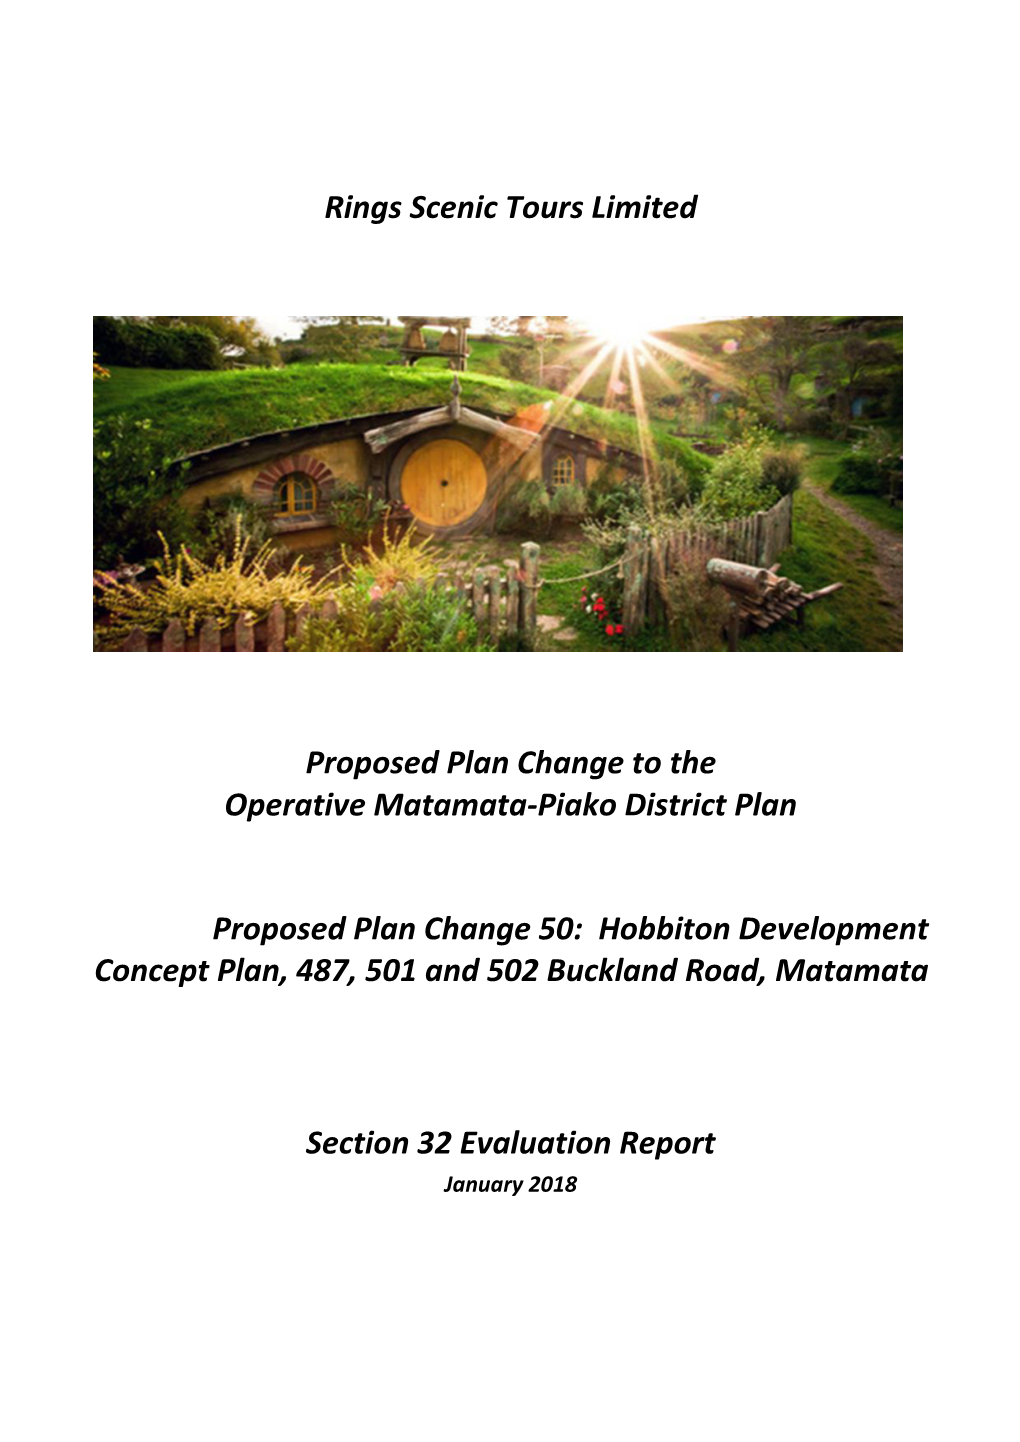 Hobbiton Development Concept Plan, 487, 501 and 502 Buckland Road, Matamata